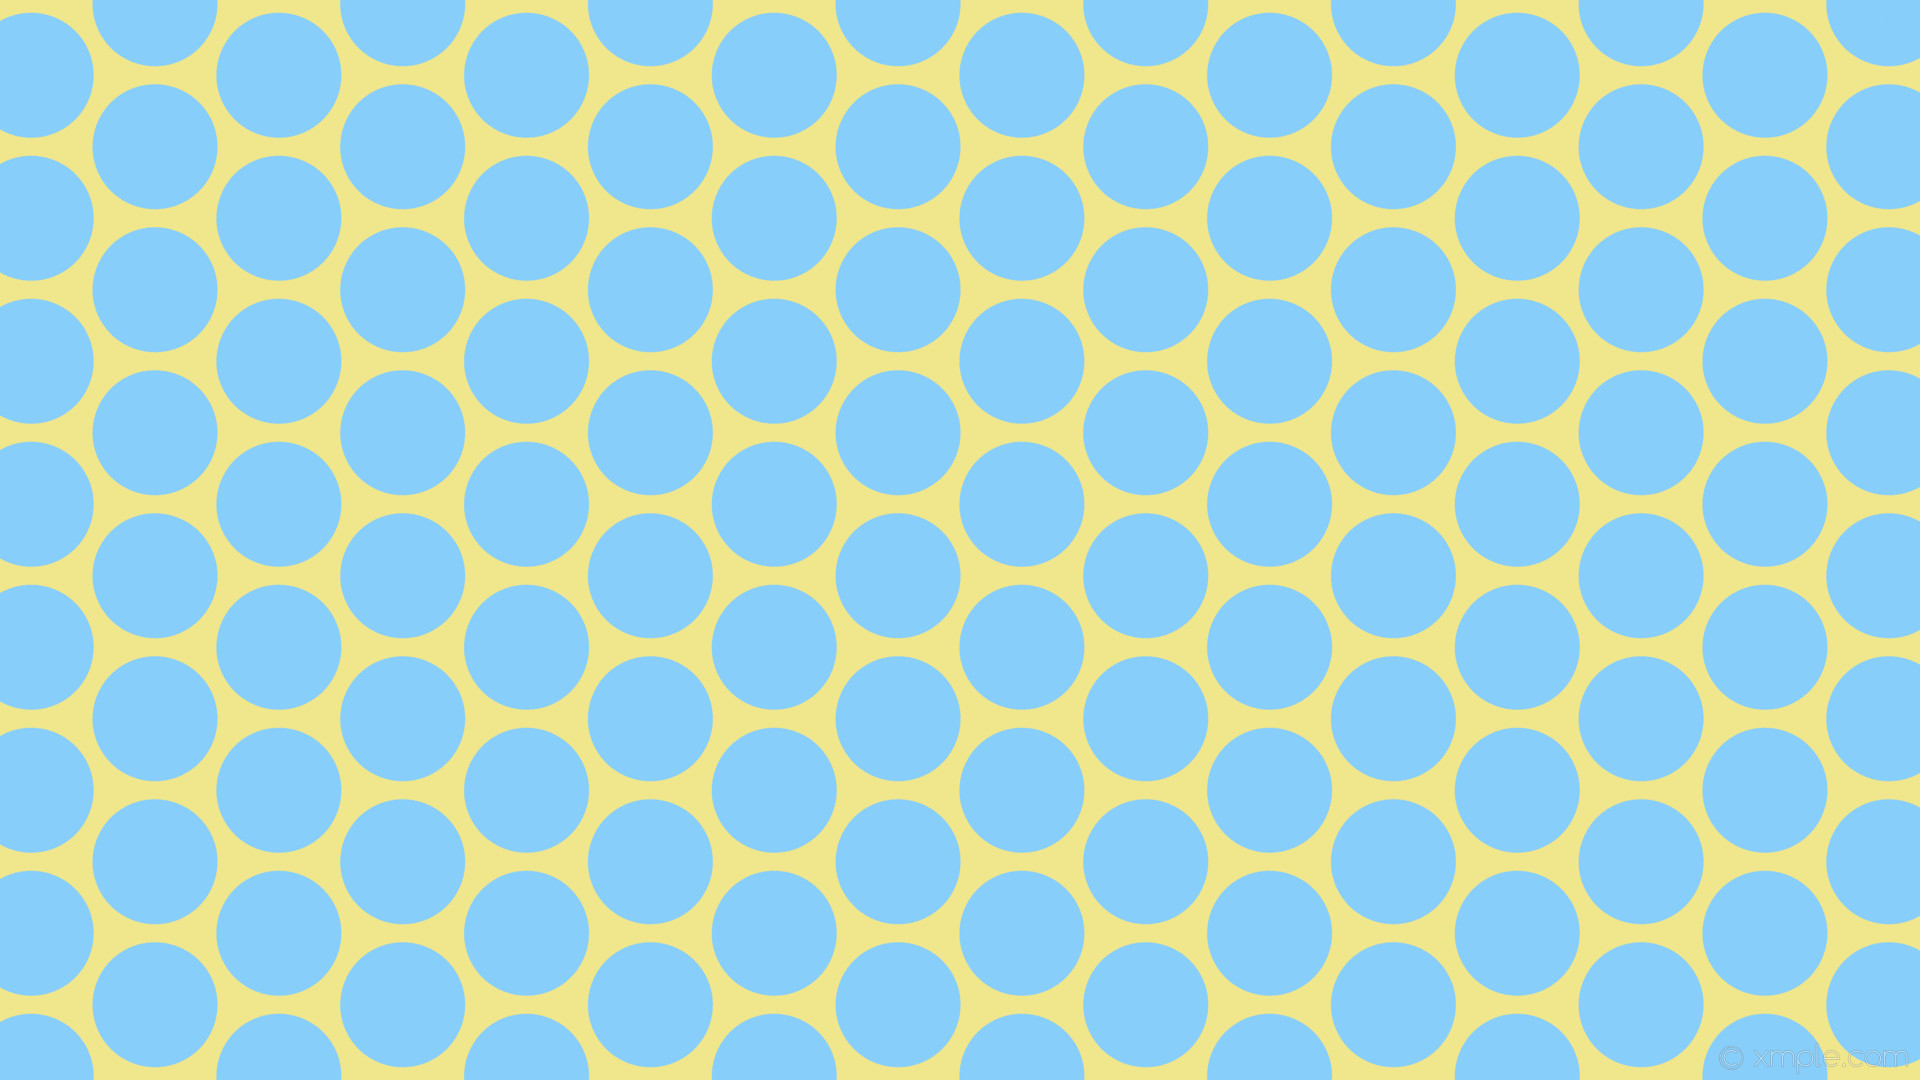 1920x1080 wallpaper yellow blue polka dots hexagon khaki light sky blue #f0e68c  #87cefa diagonal 30